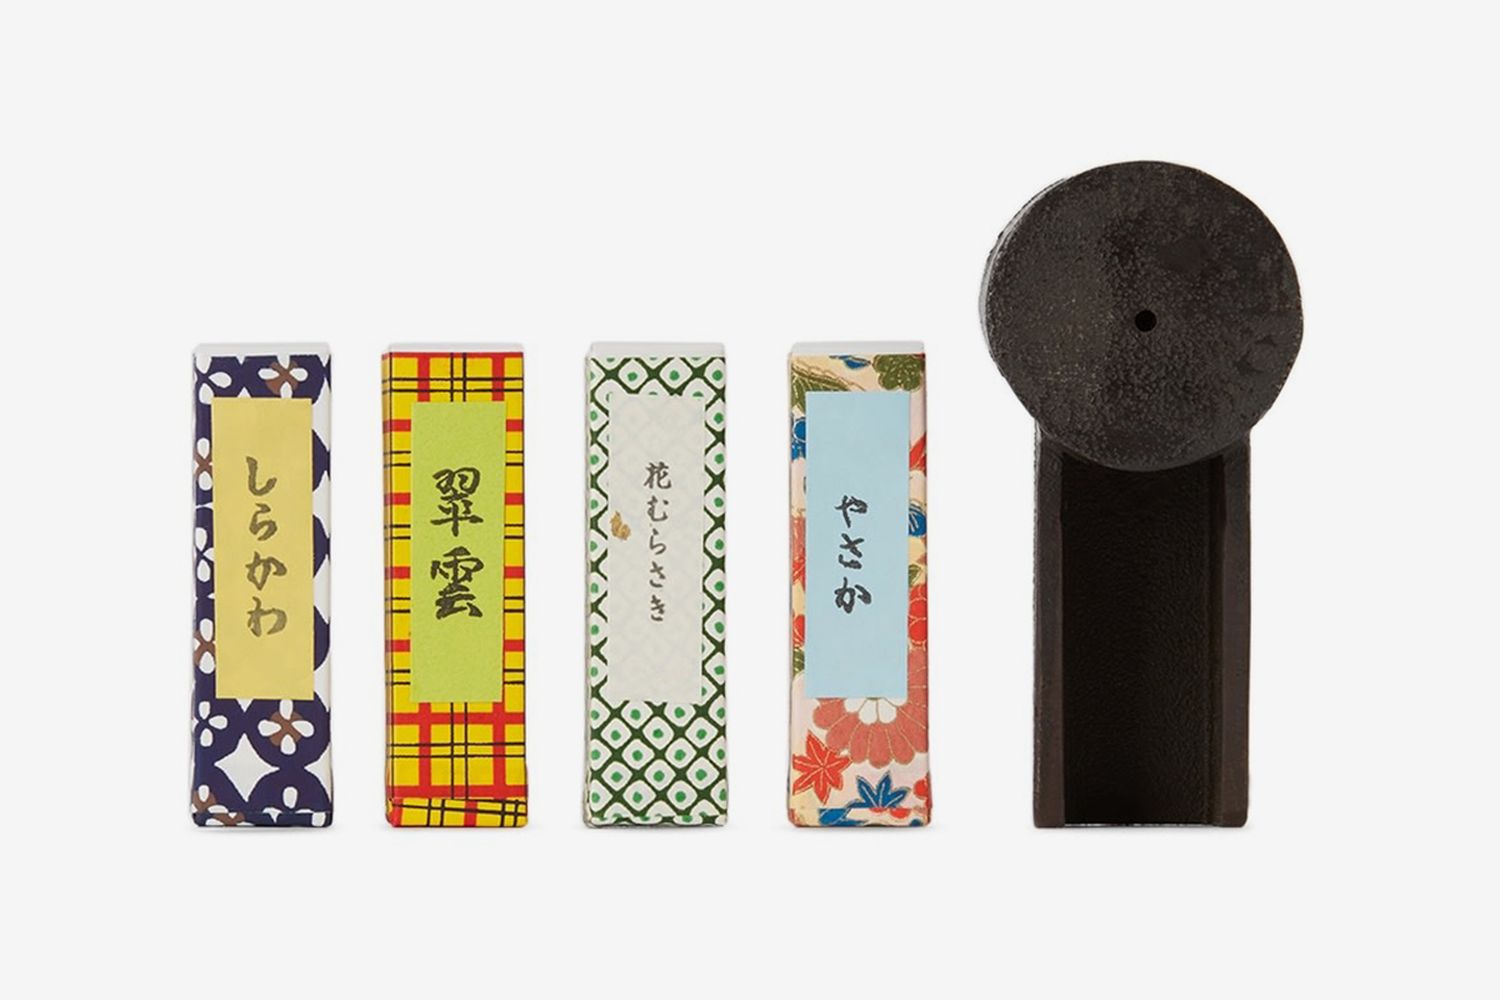 Limited Edition Kyoto Incense Burner